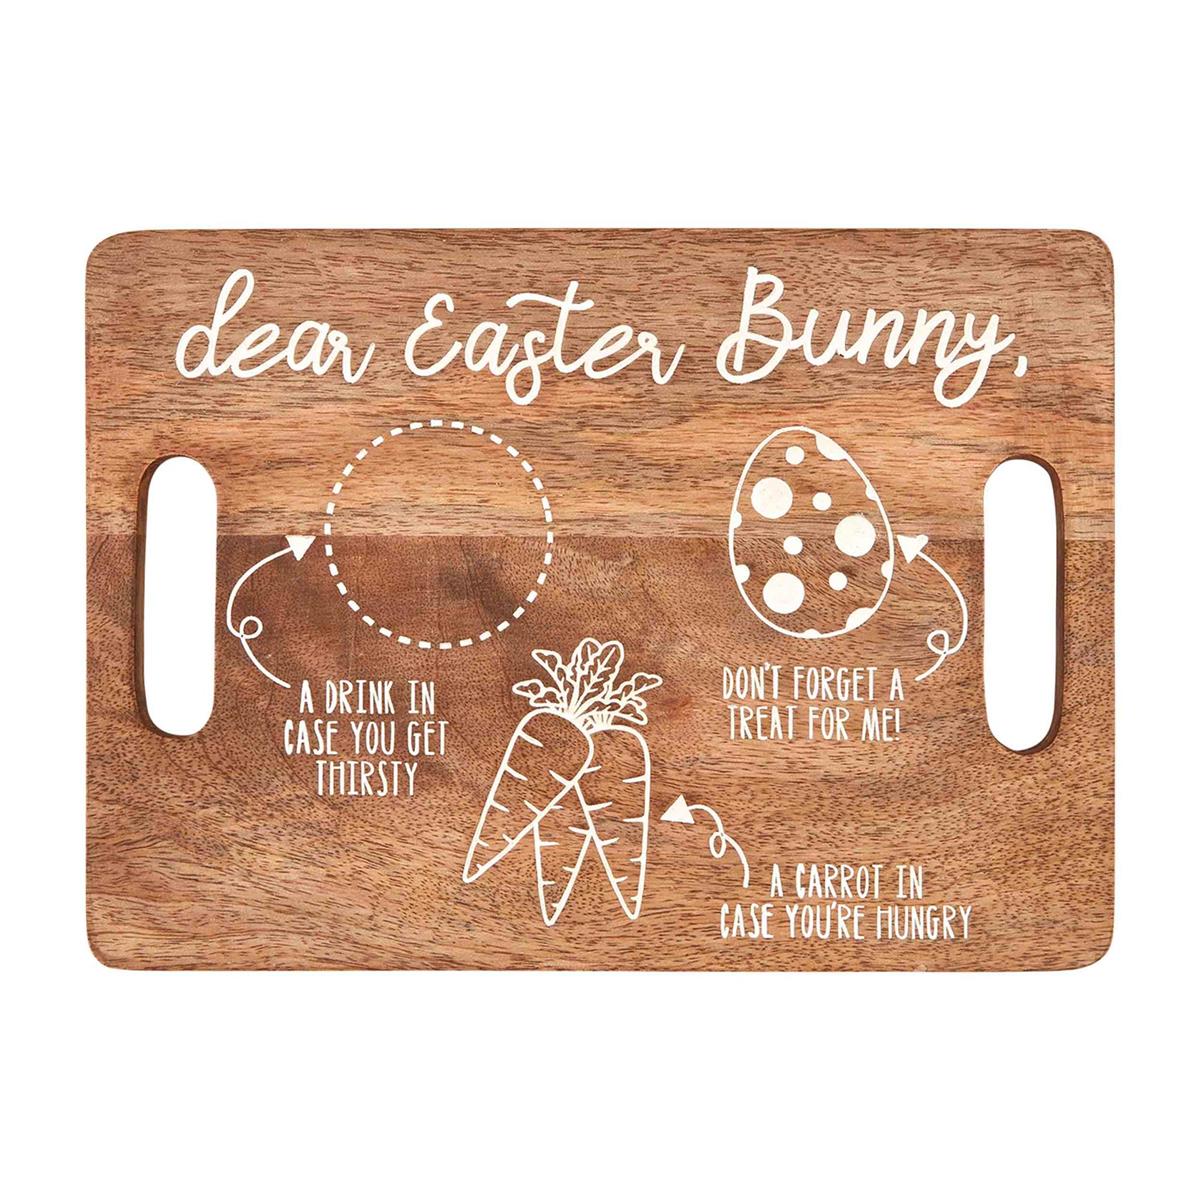 Mud Pie Easter Bunny Treat Tray